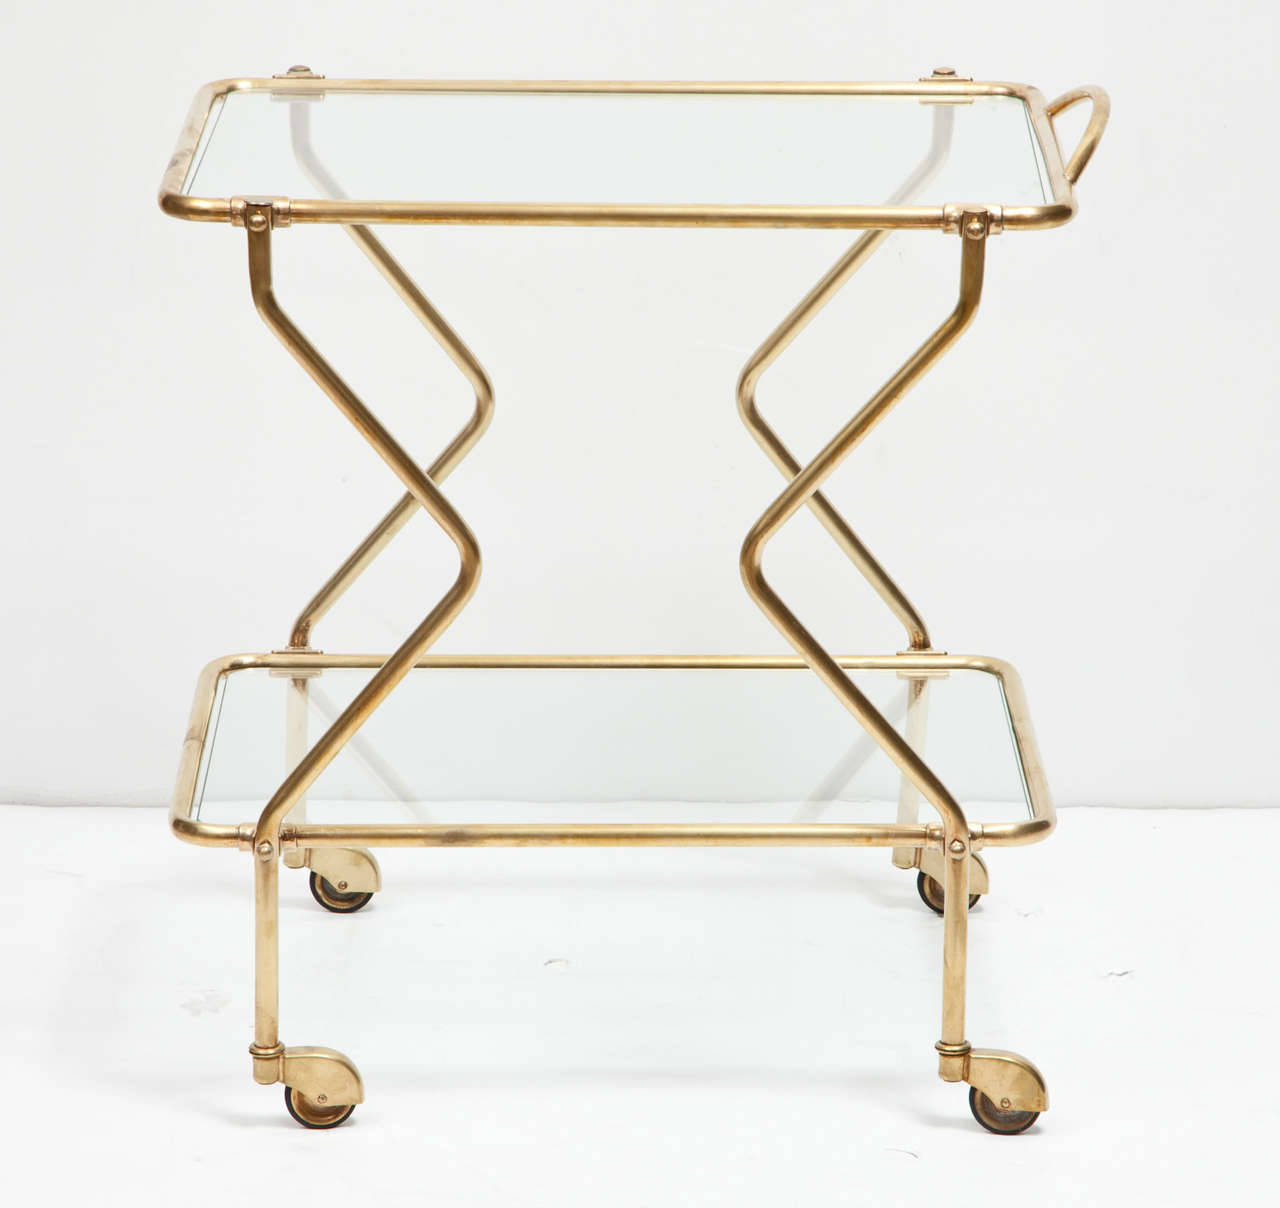 Decorative brass bar cart from Italy, circa 1950.